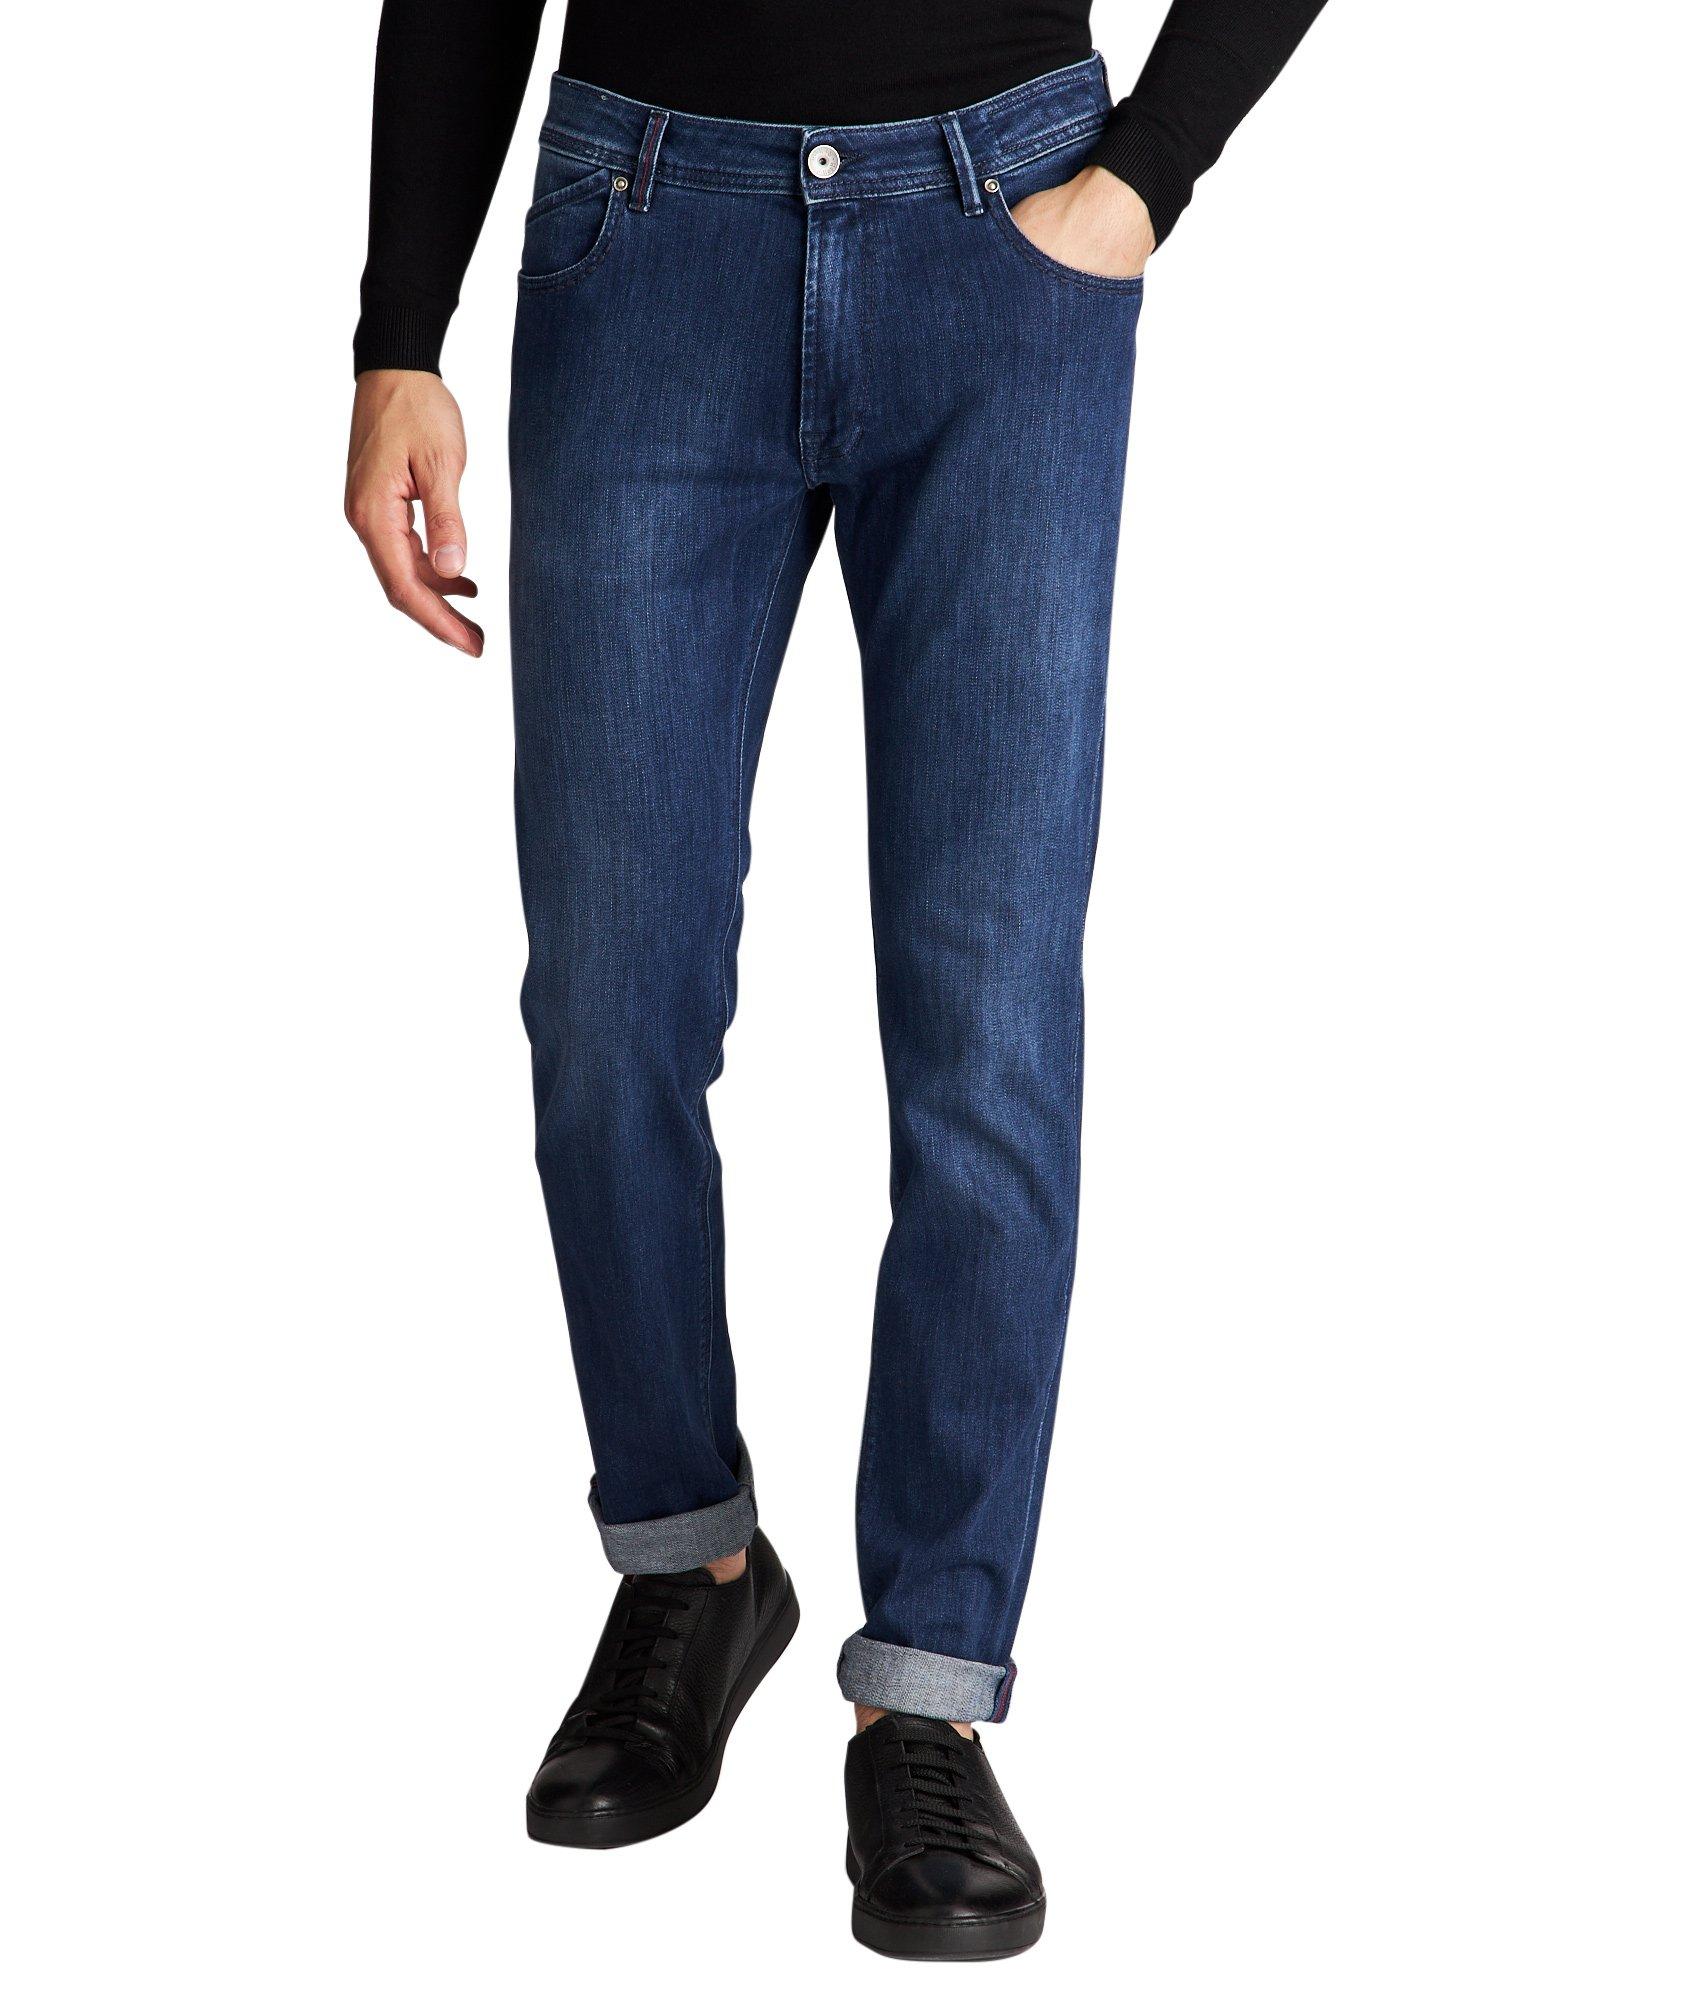 Hopper Slim Fit Jeans image 0